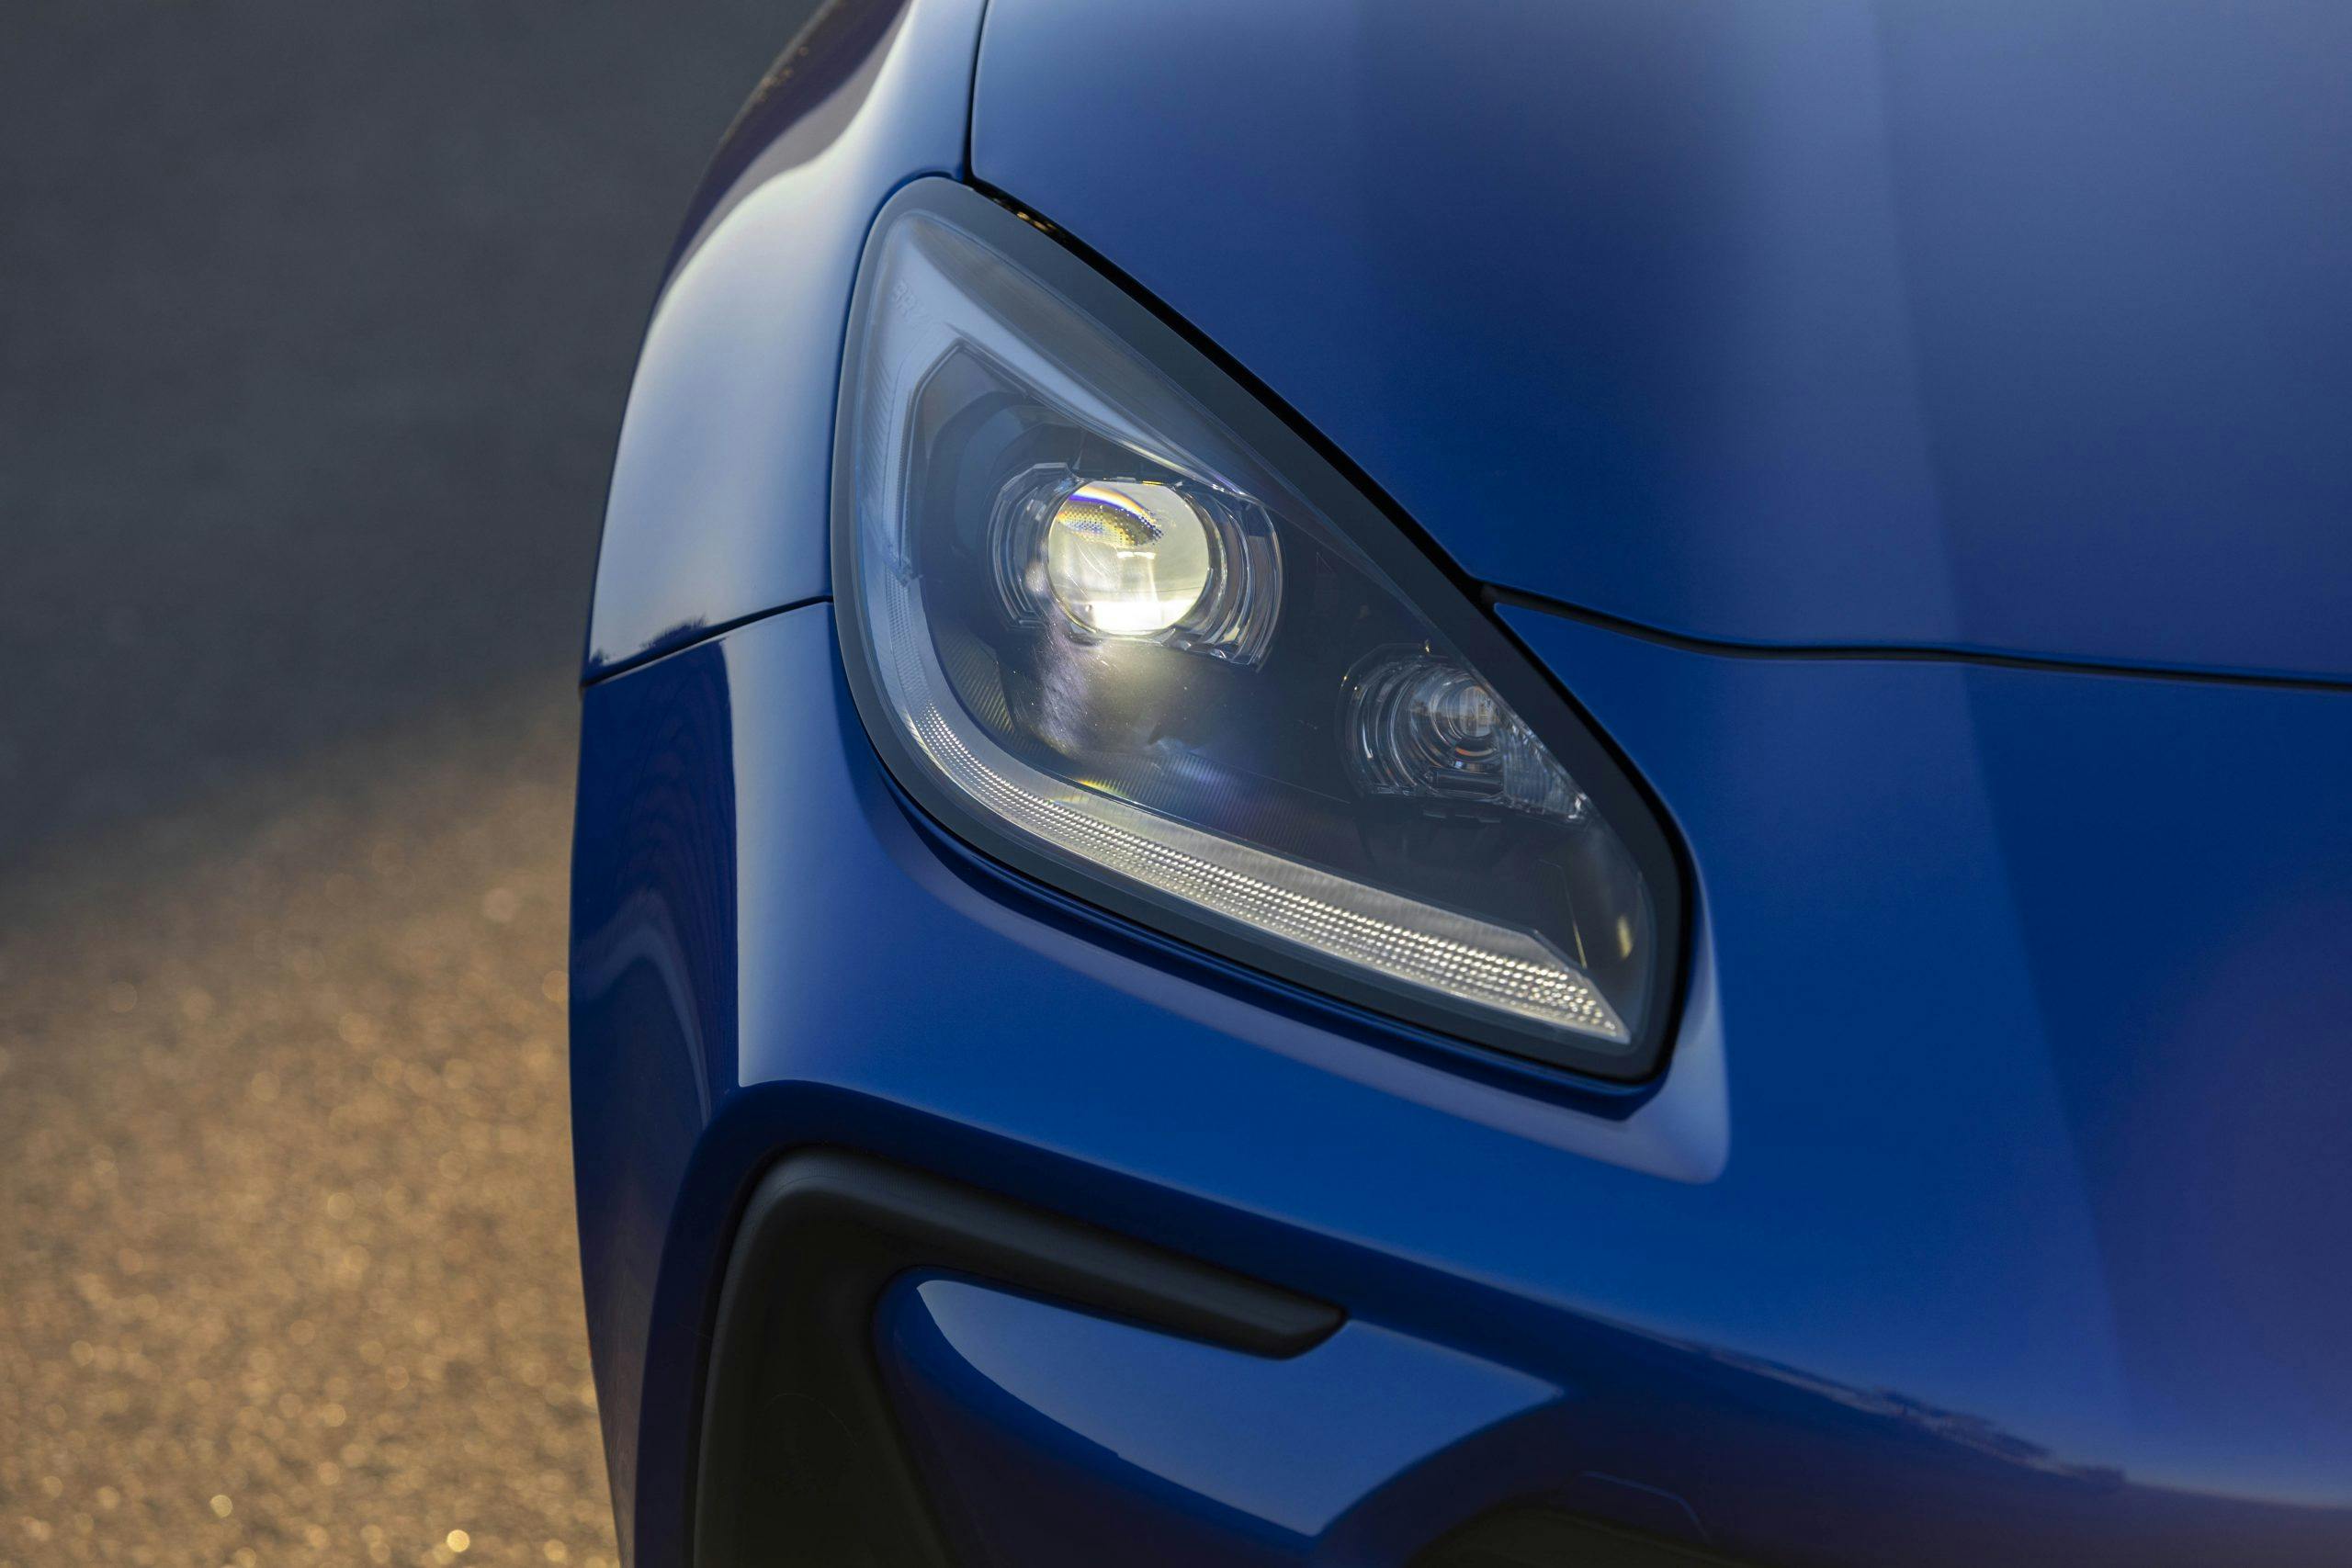 New 2022 Subaru BRZ headlight